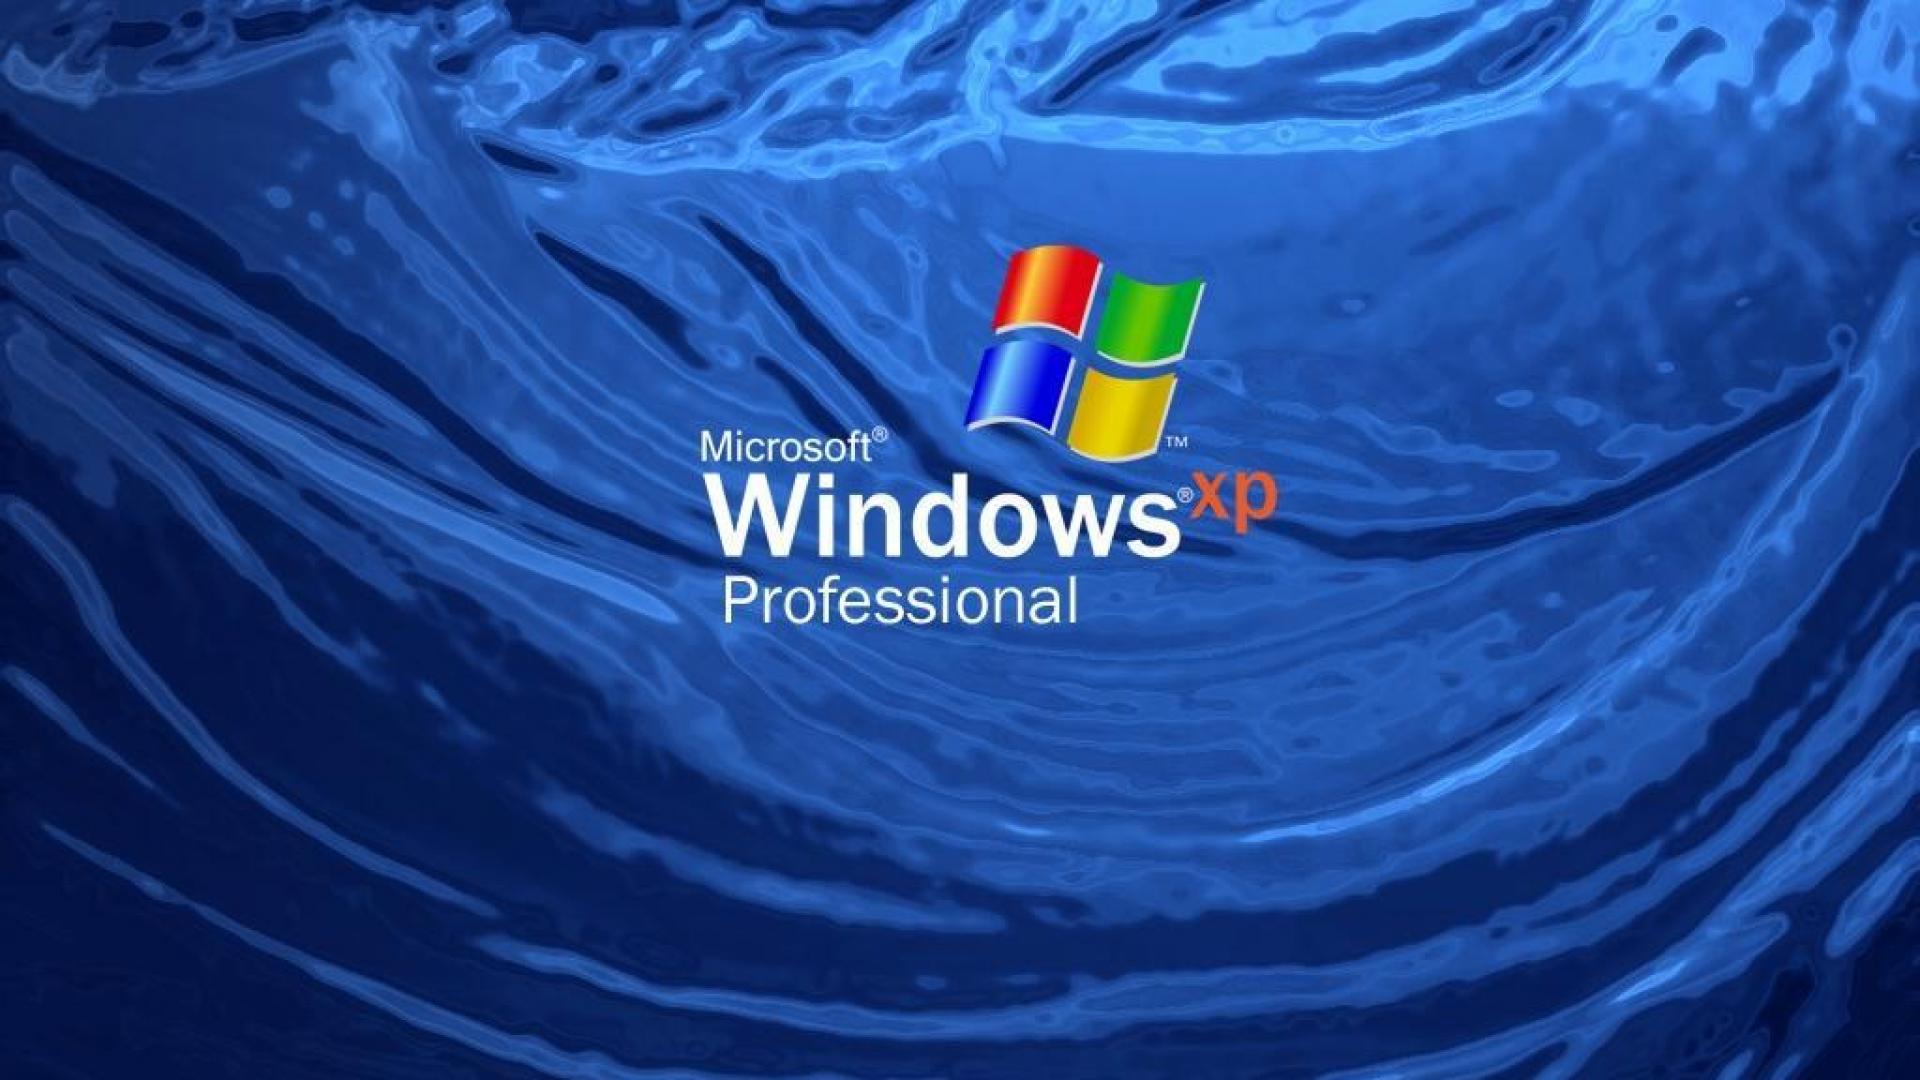 WINDOWS XP PROFESSIONAL WALLPAPER - - HD Wallpapers